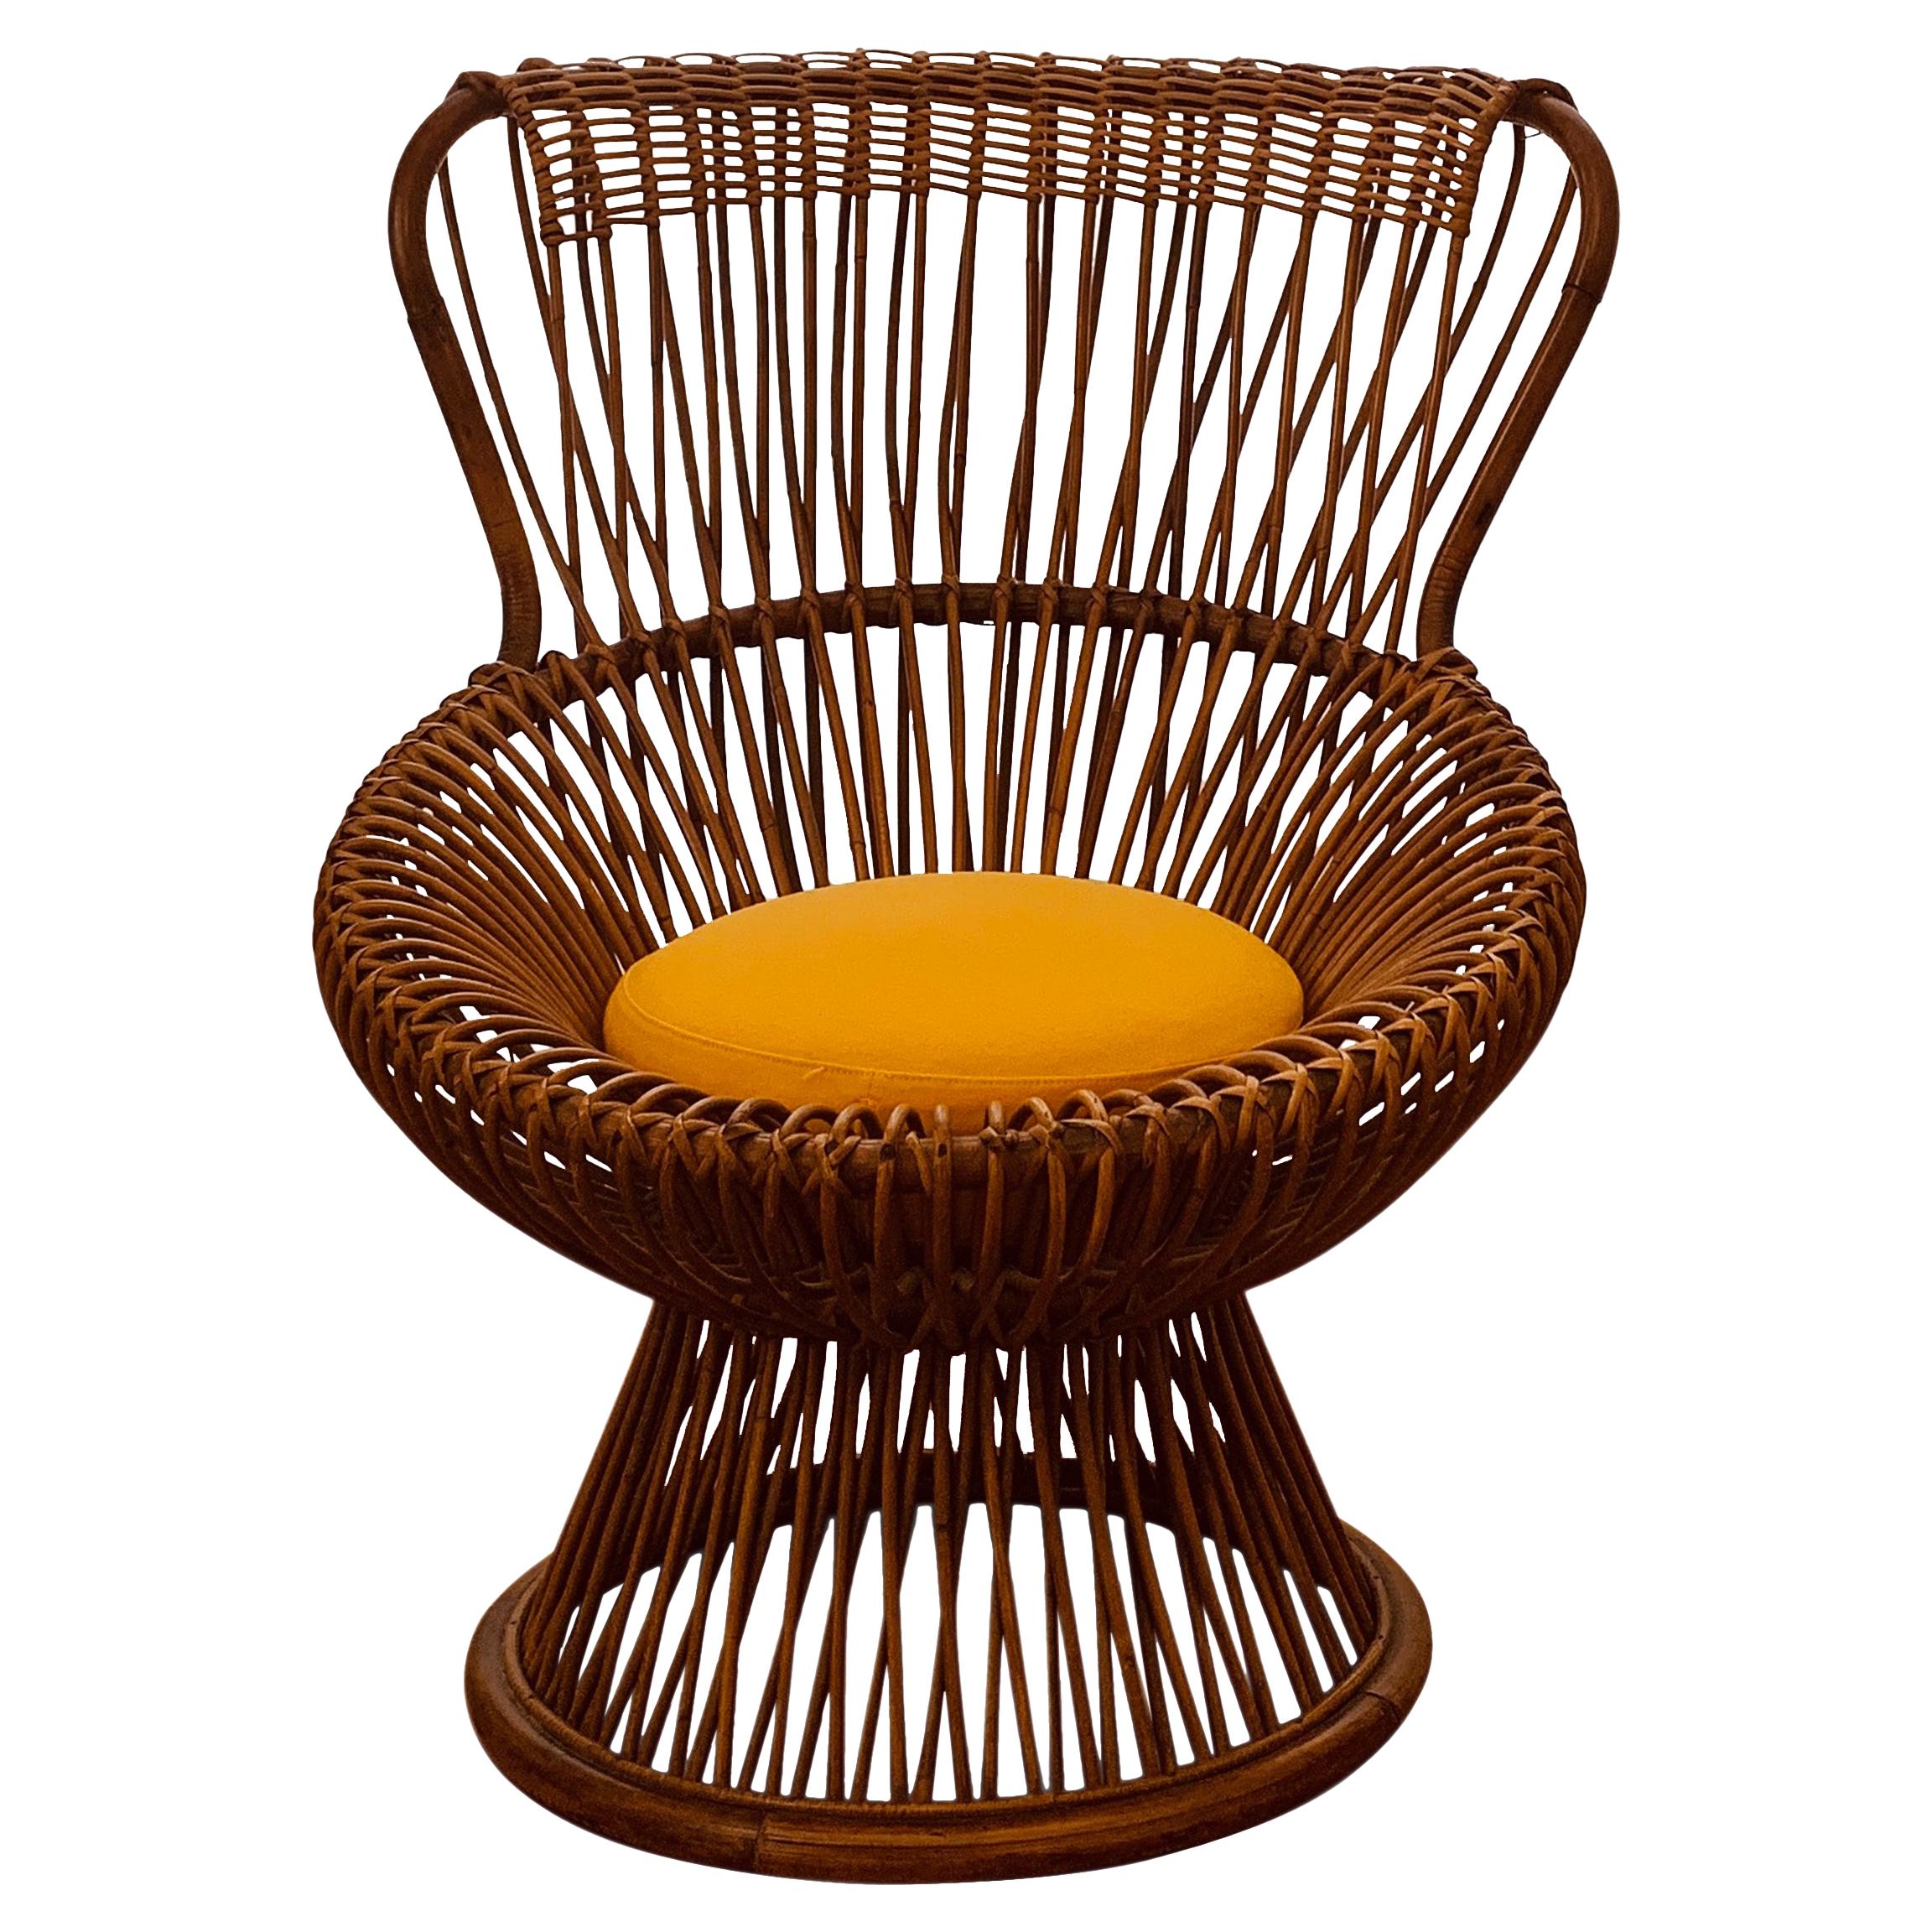 Franco Albini for Bonacina, Mid-Century Rattan Chair "Margherita", 1950